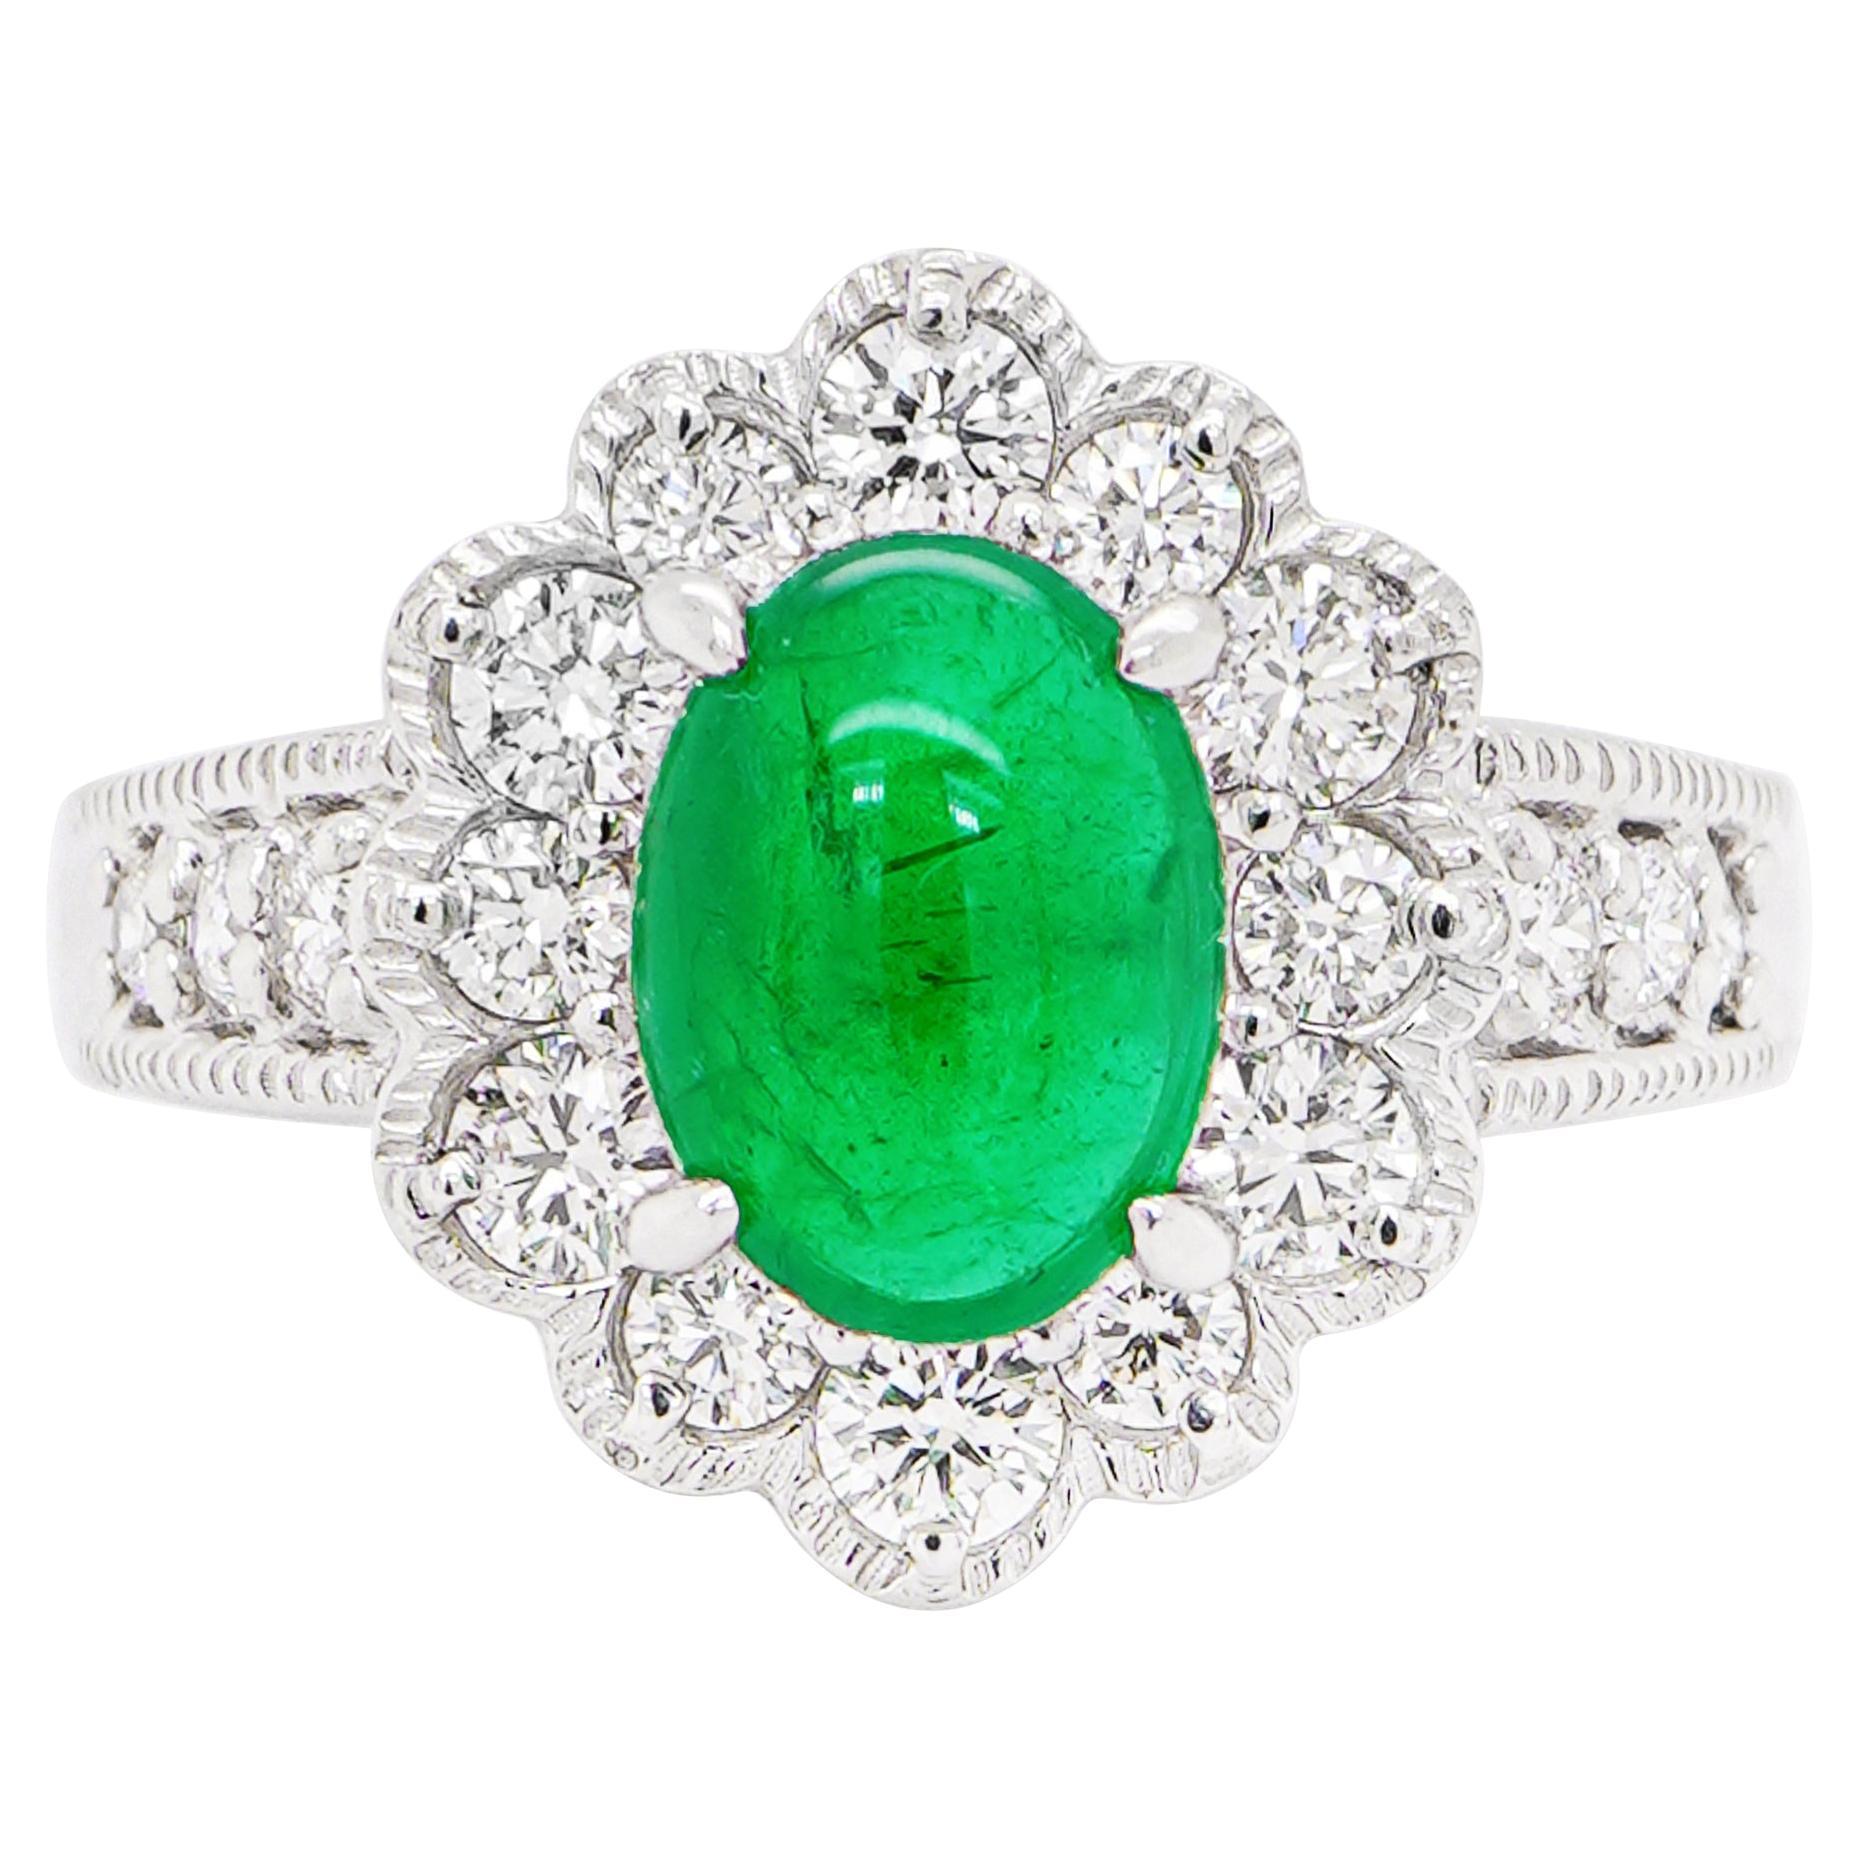 1.82 Carat Colombian Emerald & 0.83 Carat White Diamond PT 900 Simple Ring